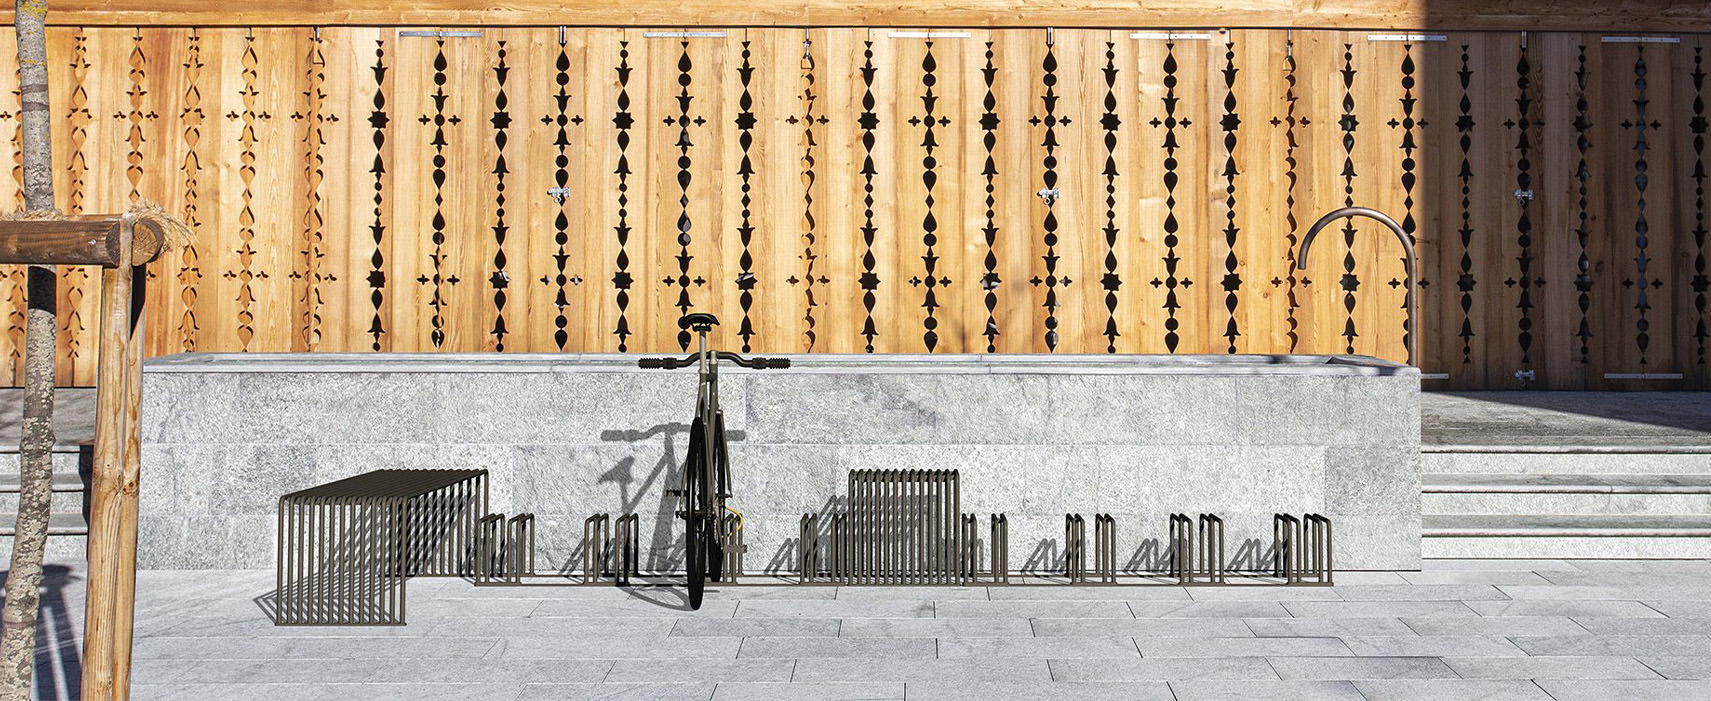 Streetscape bike racks with a bench.